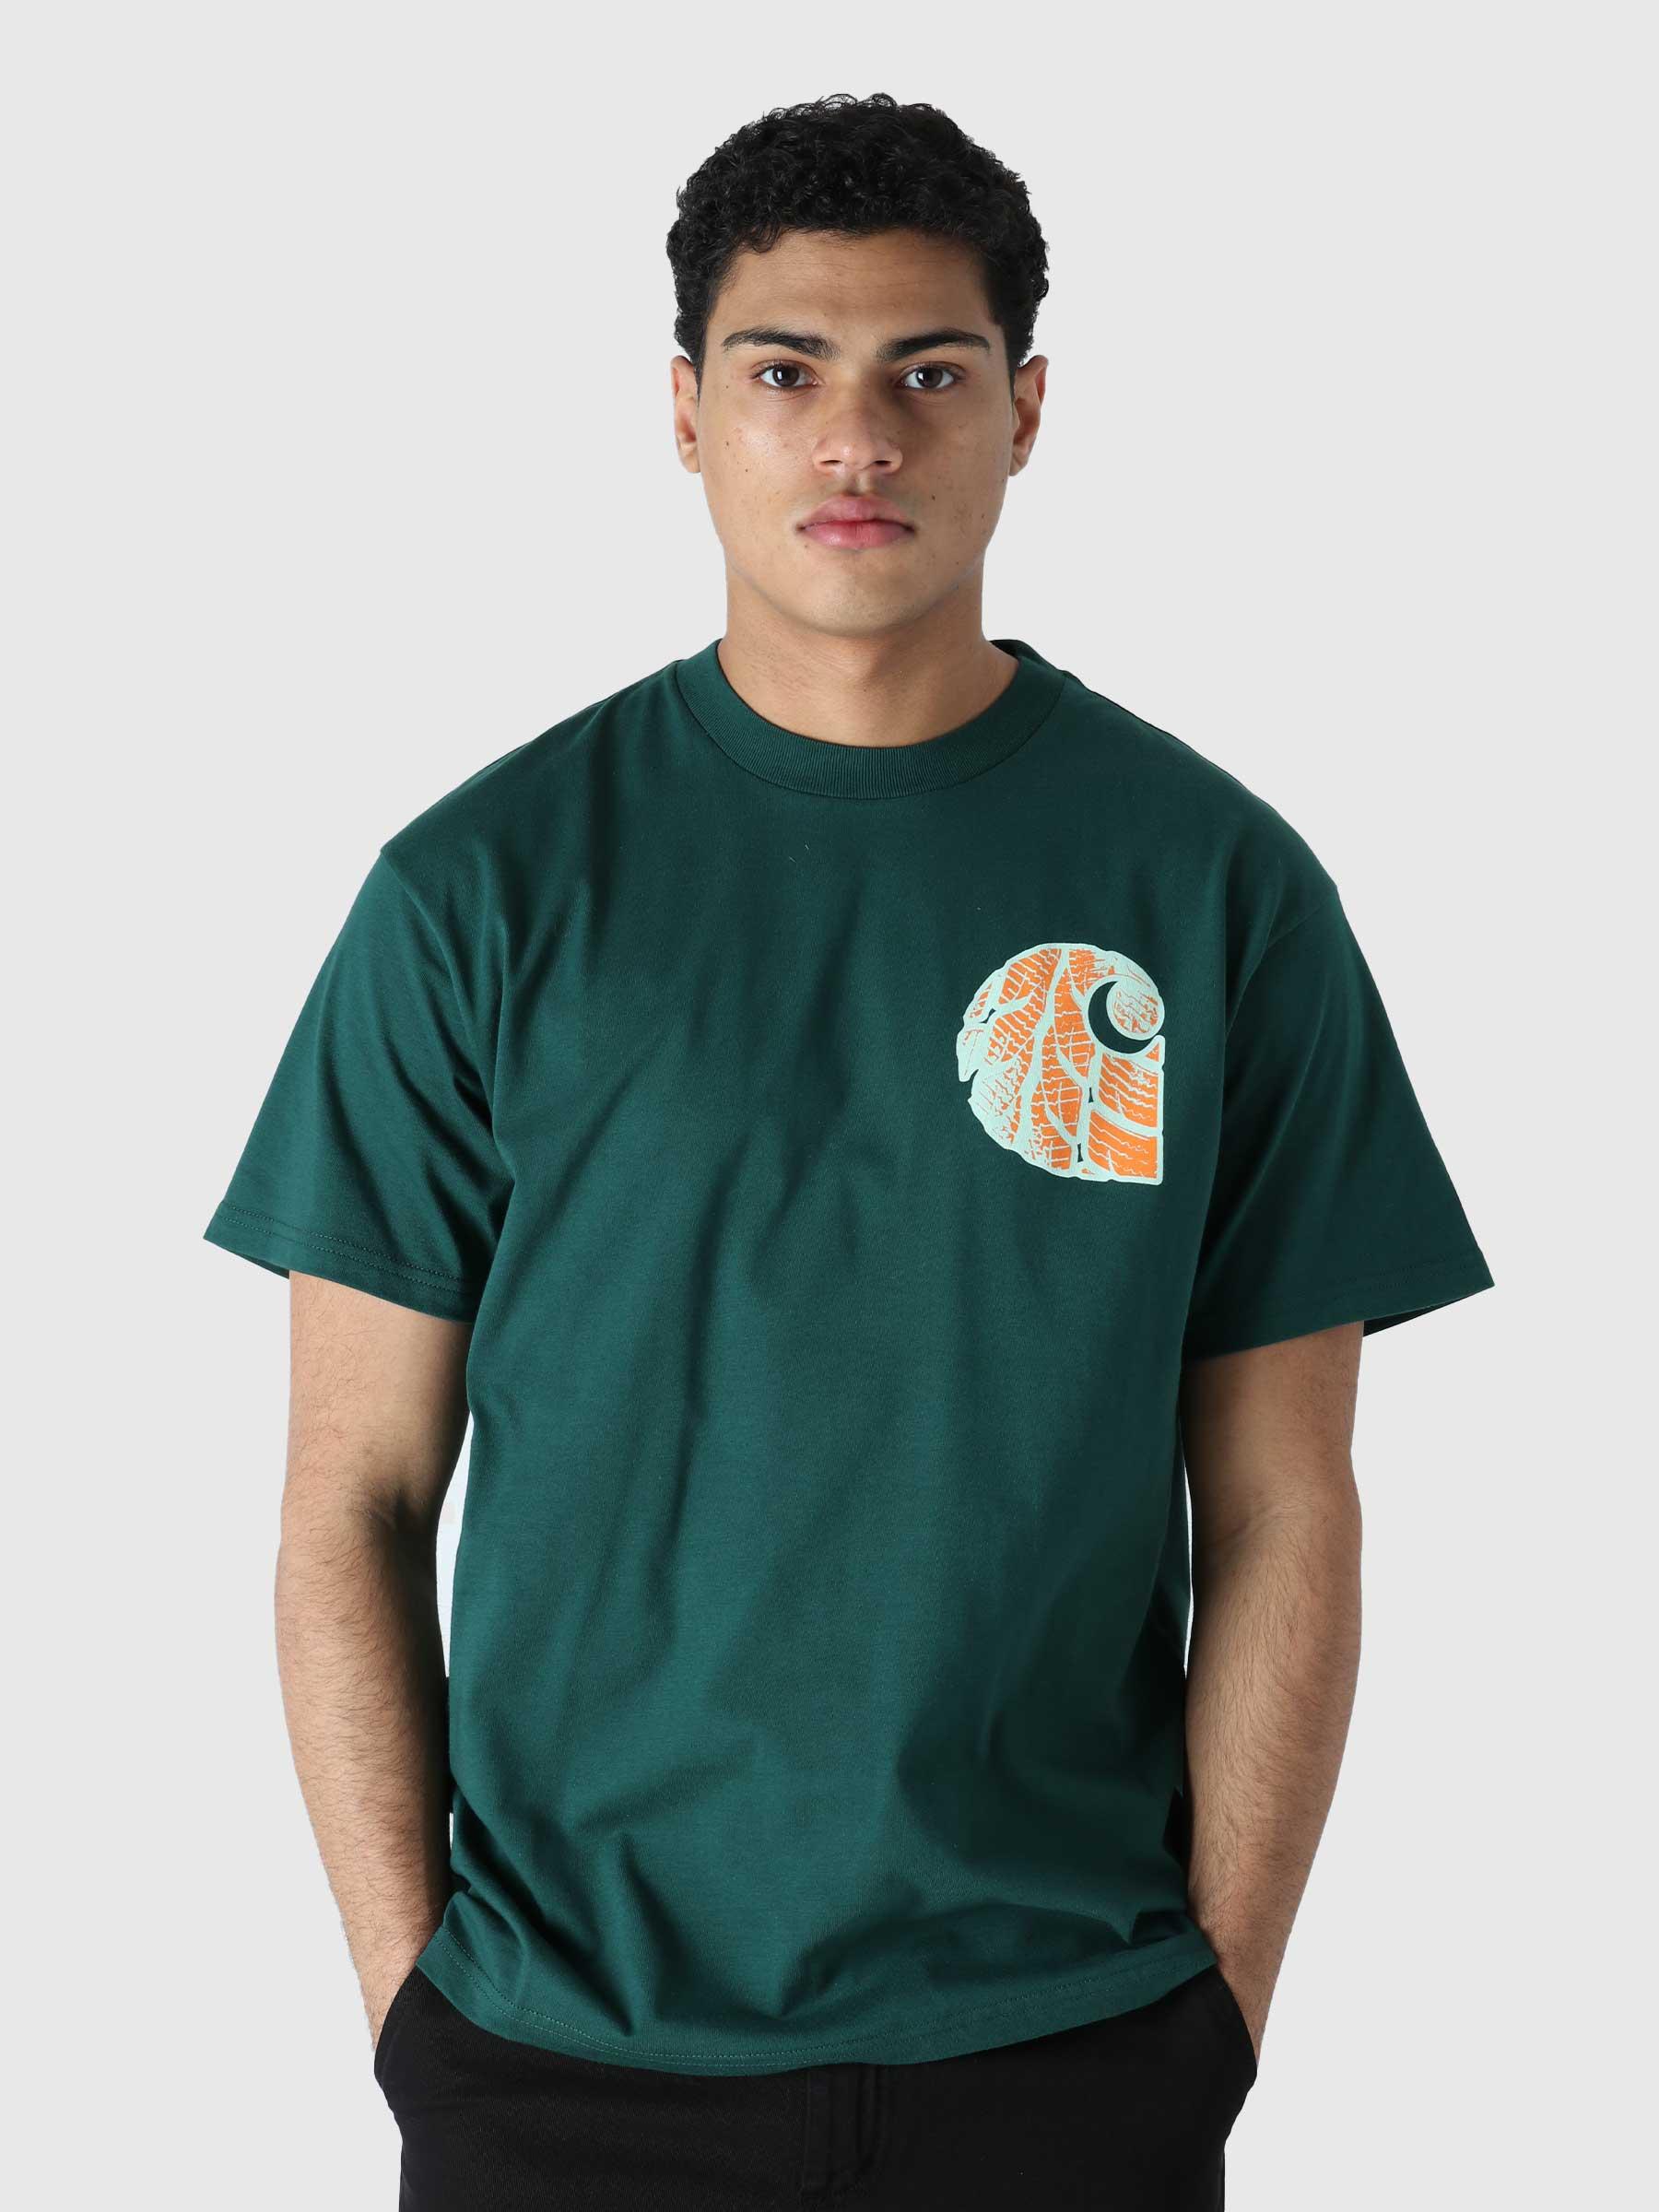 S/S Longhaul T-Shirt Hedge I030189-827XX